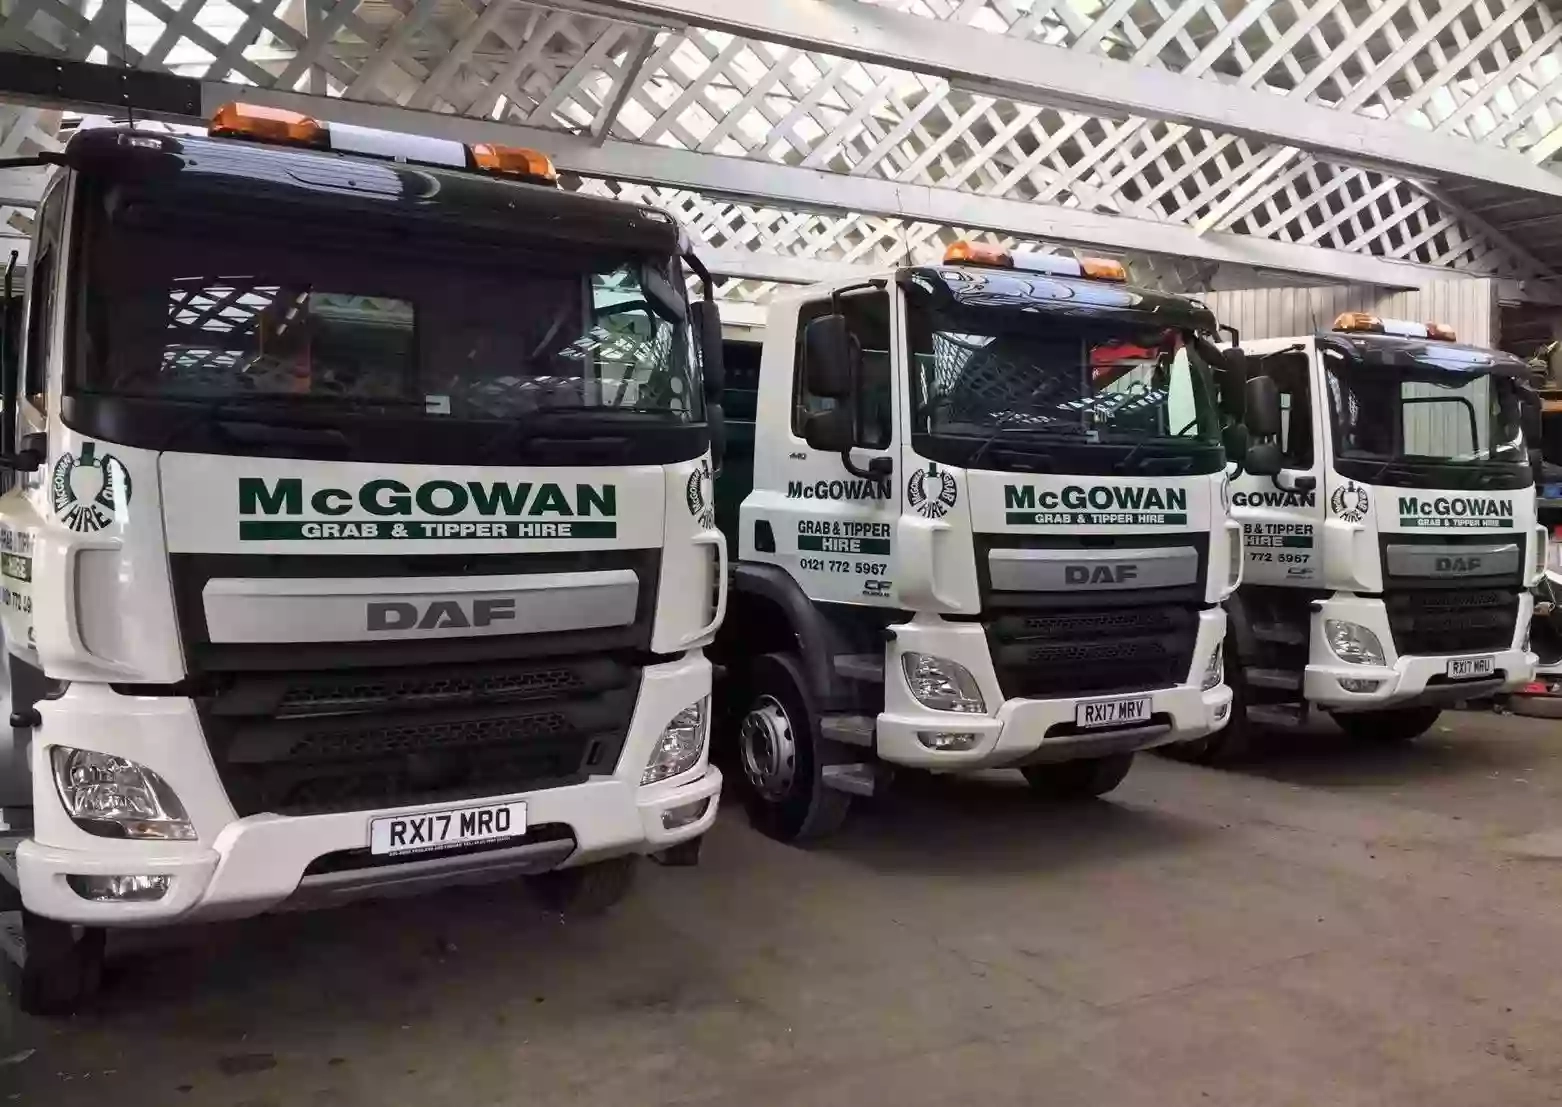 Paul McGowan Grab Hire Ltd